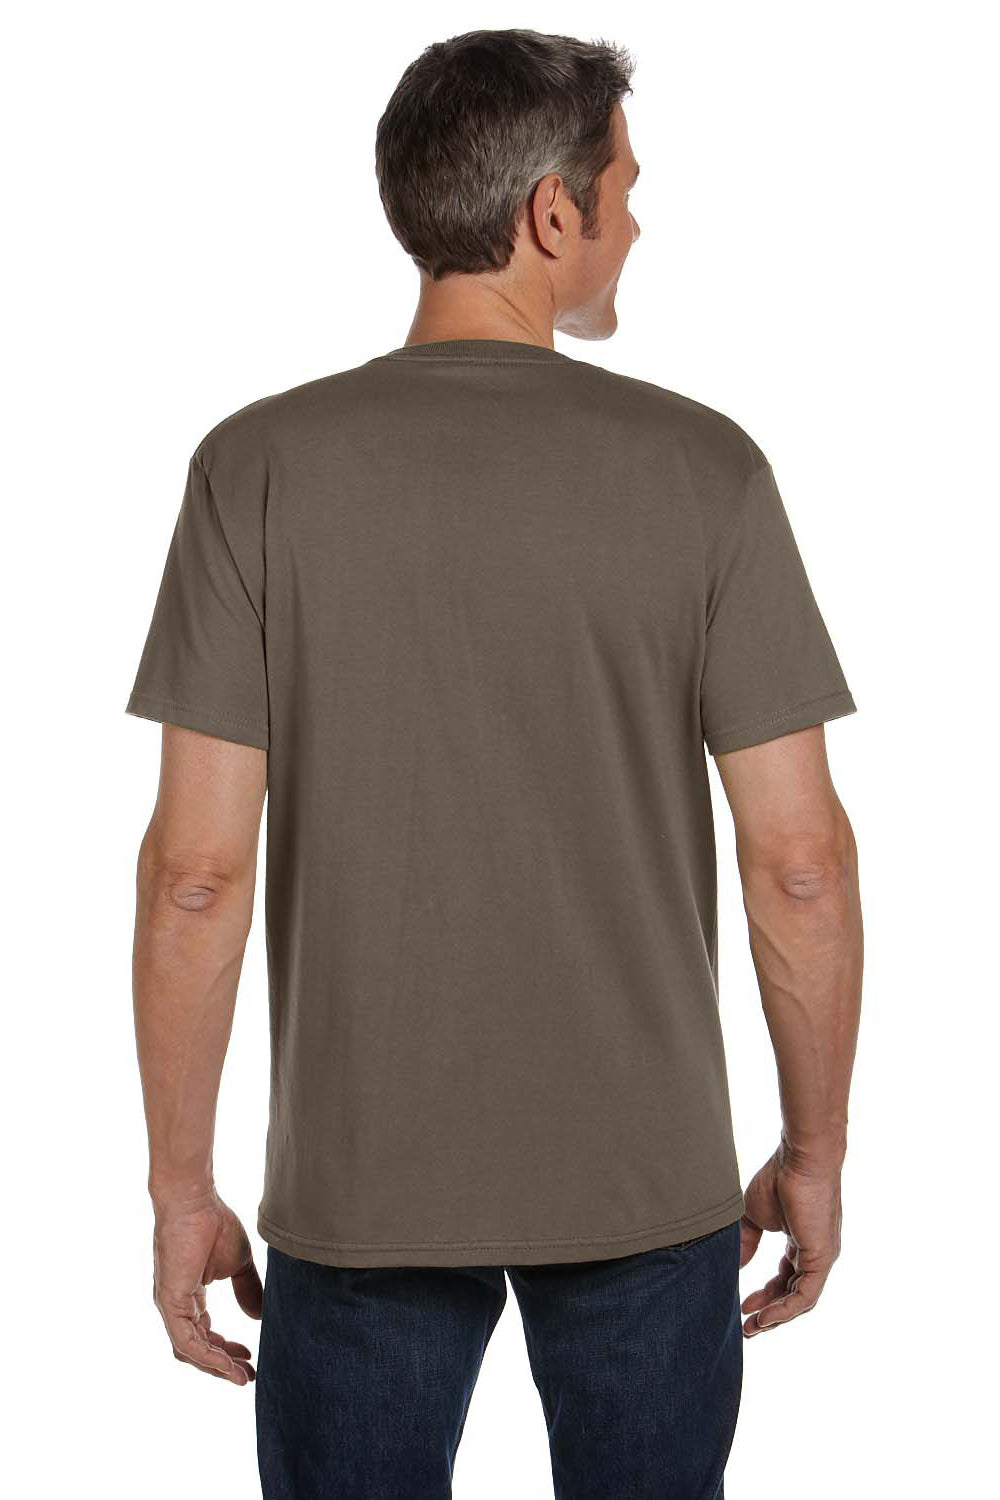 Econscious EC1000 Mens Short Sleeve Crewneck T-Shirt Meteorite Brown Back